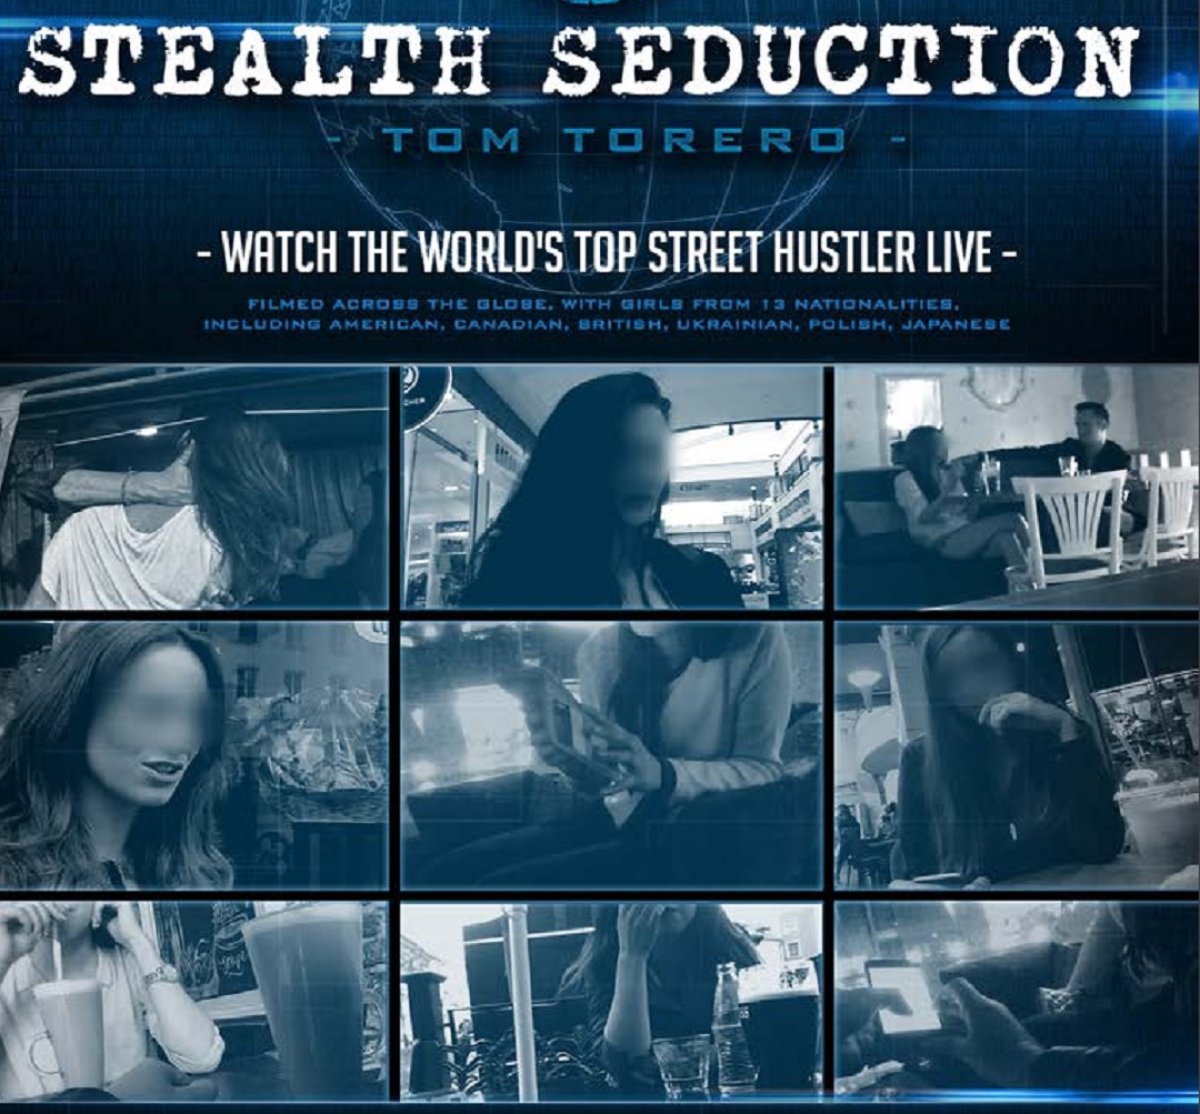 Tom Torero pick up artists Stealth Seduction